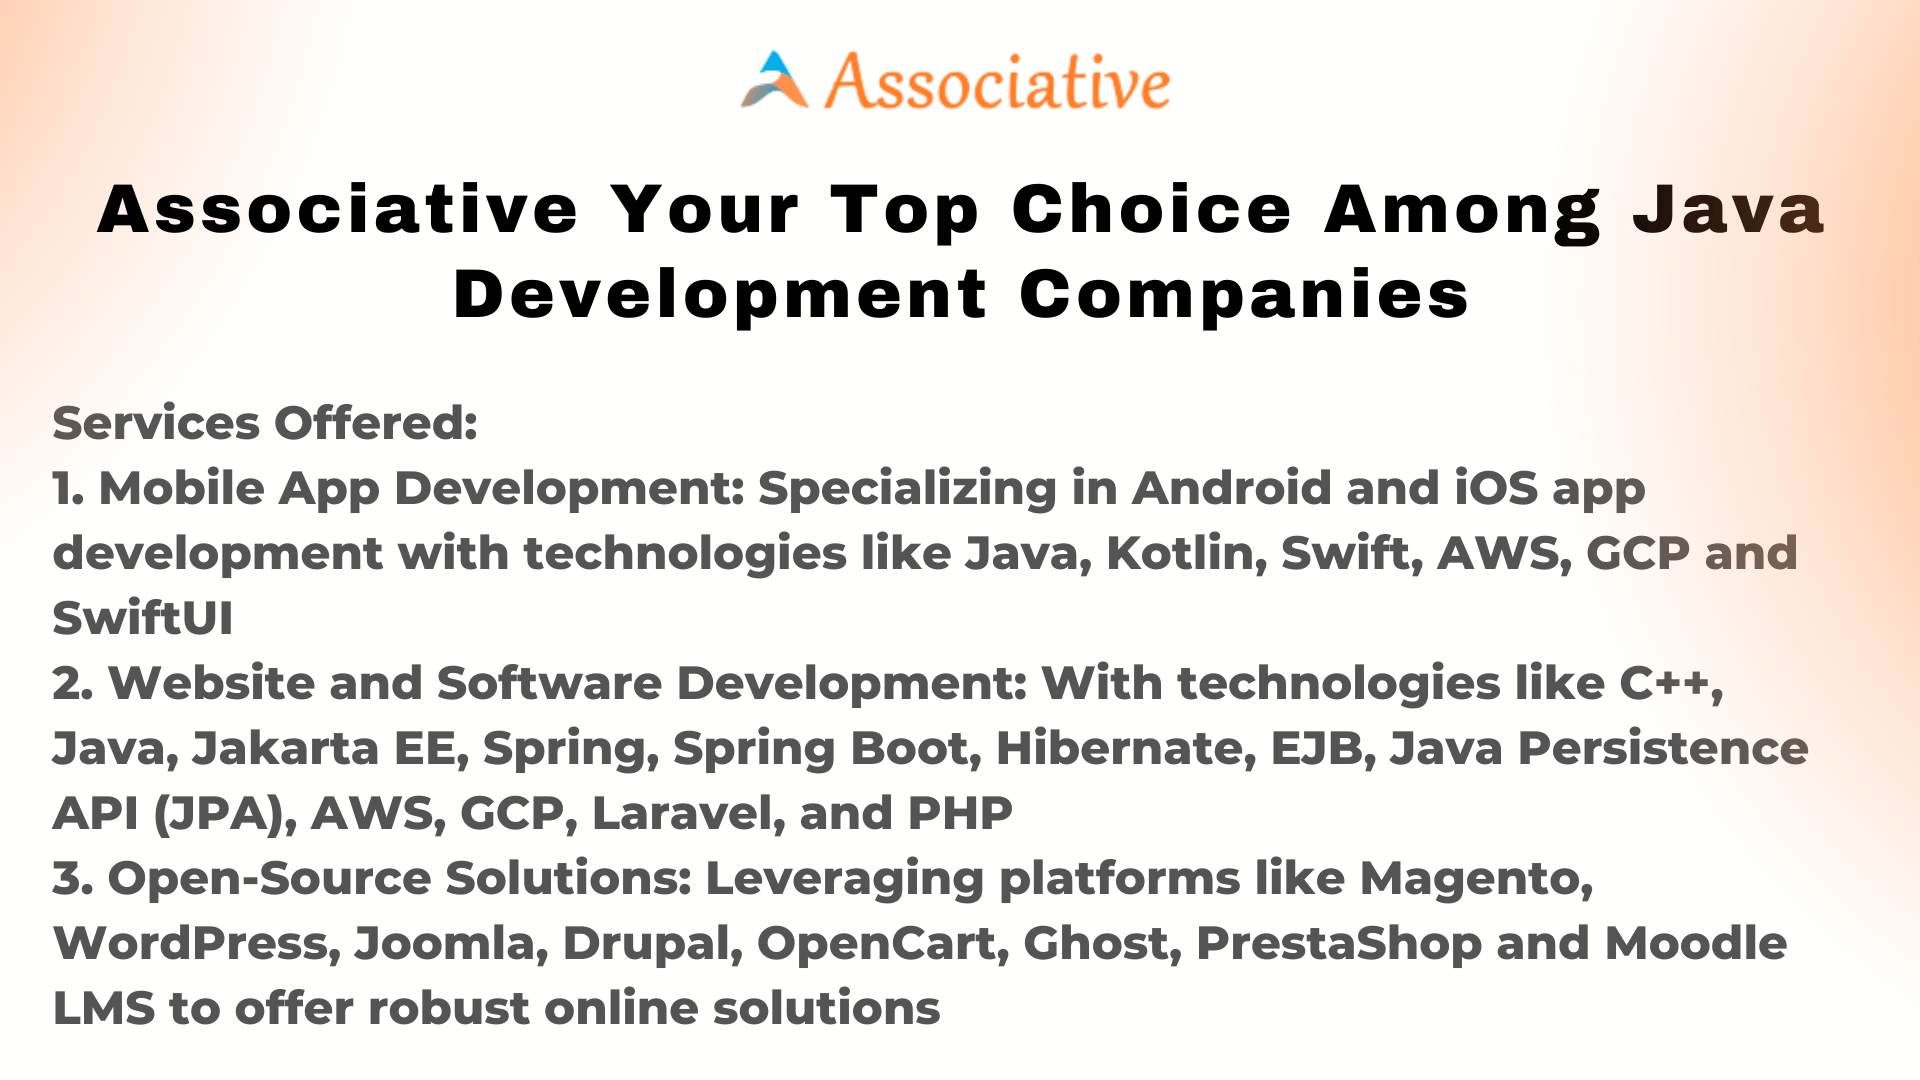 Associative Your Top Choice Among Java Development Companies